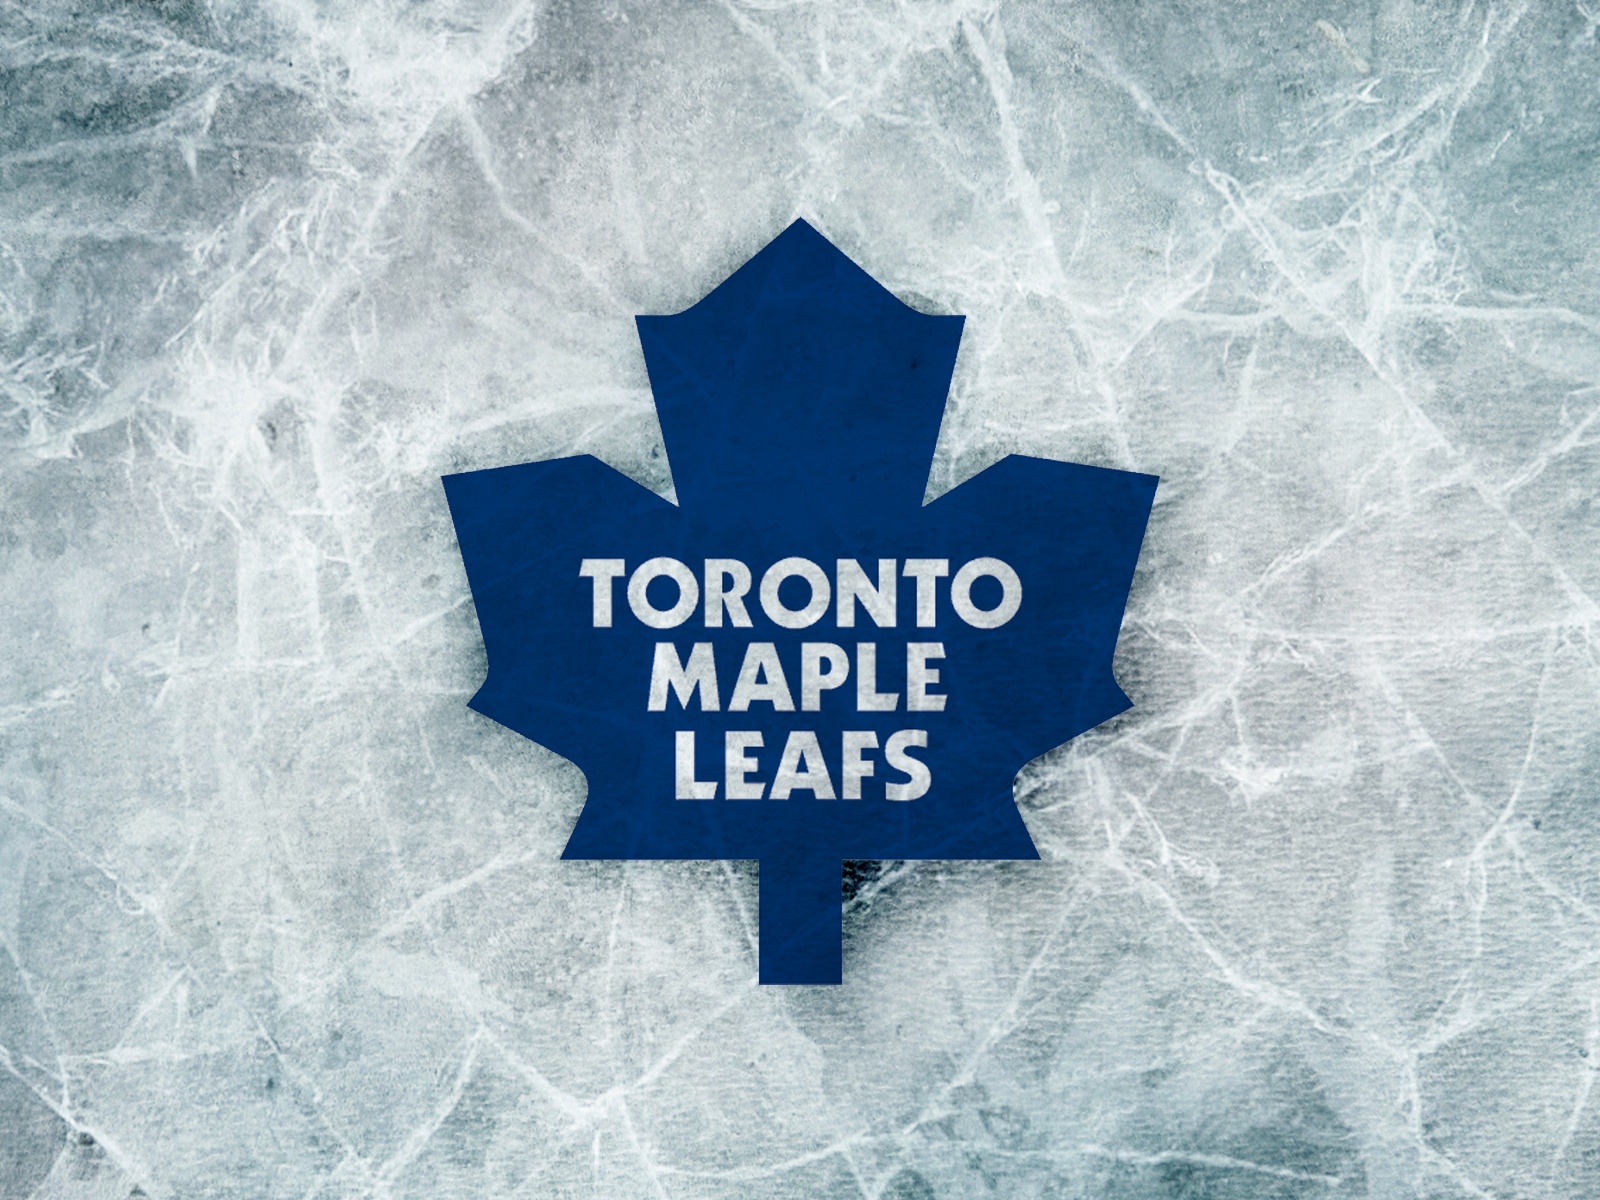 Toronto Maple Leafs Wallpaper 1600x1200 ID25616